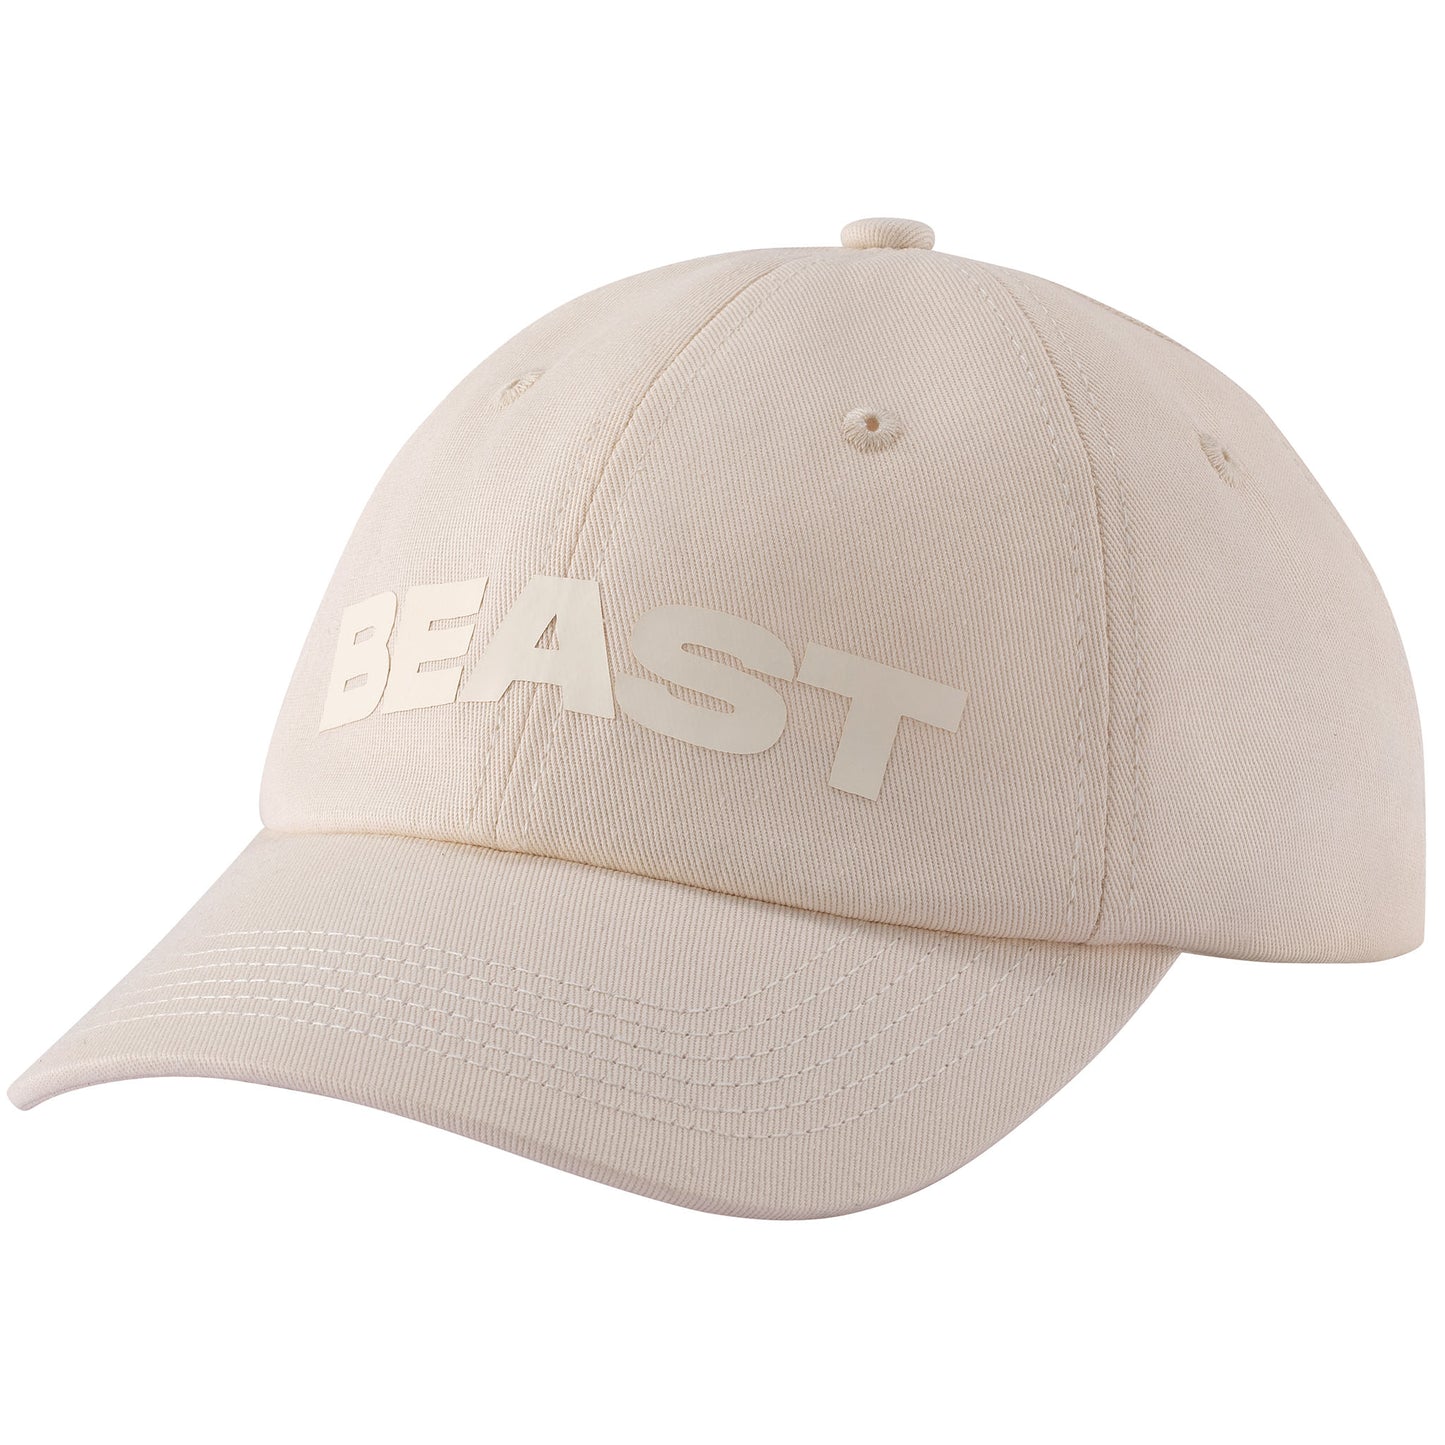 BEAST ORIGINALS HAT - OFF WHITE